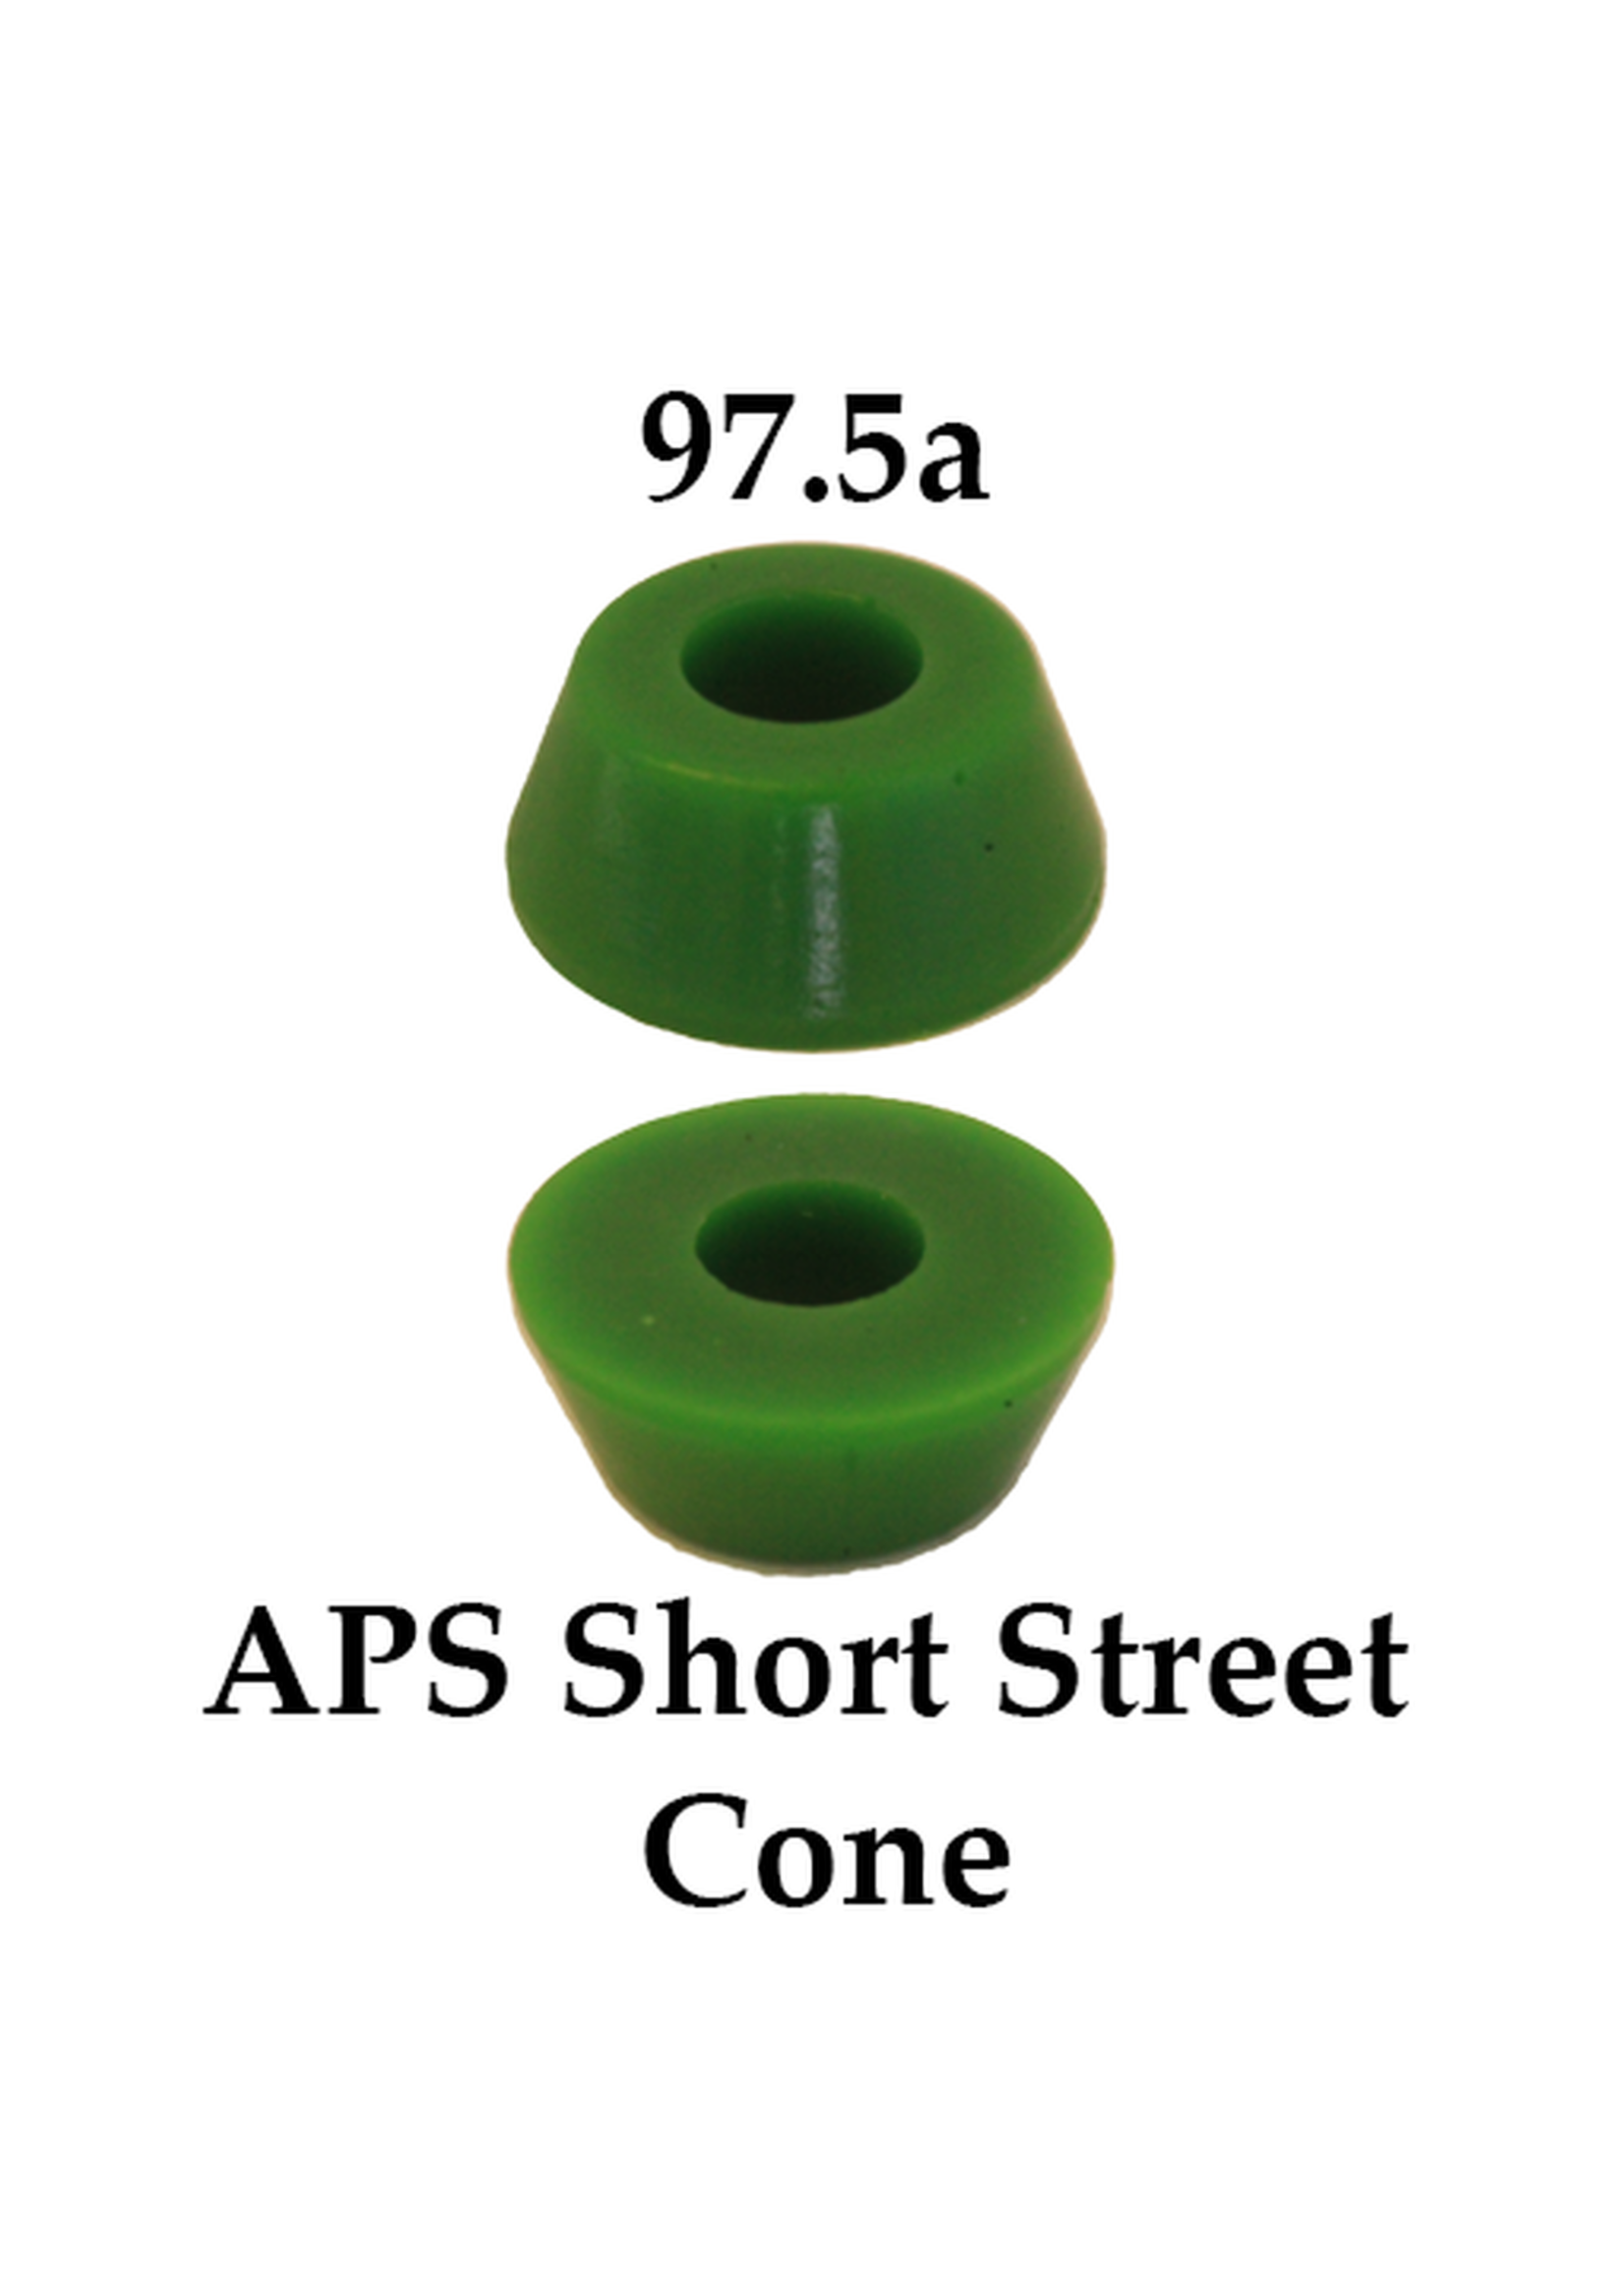 Riptide Sports APS Short Street Cone